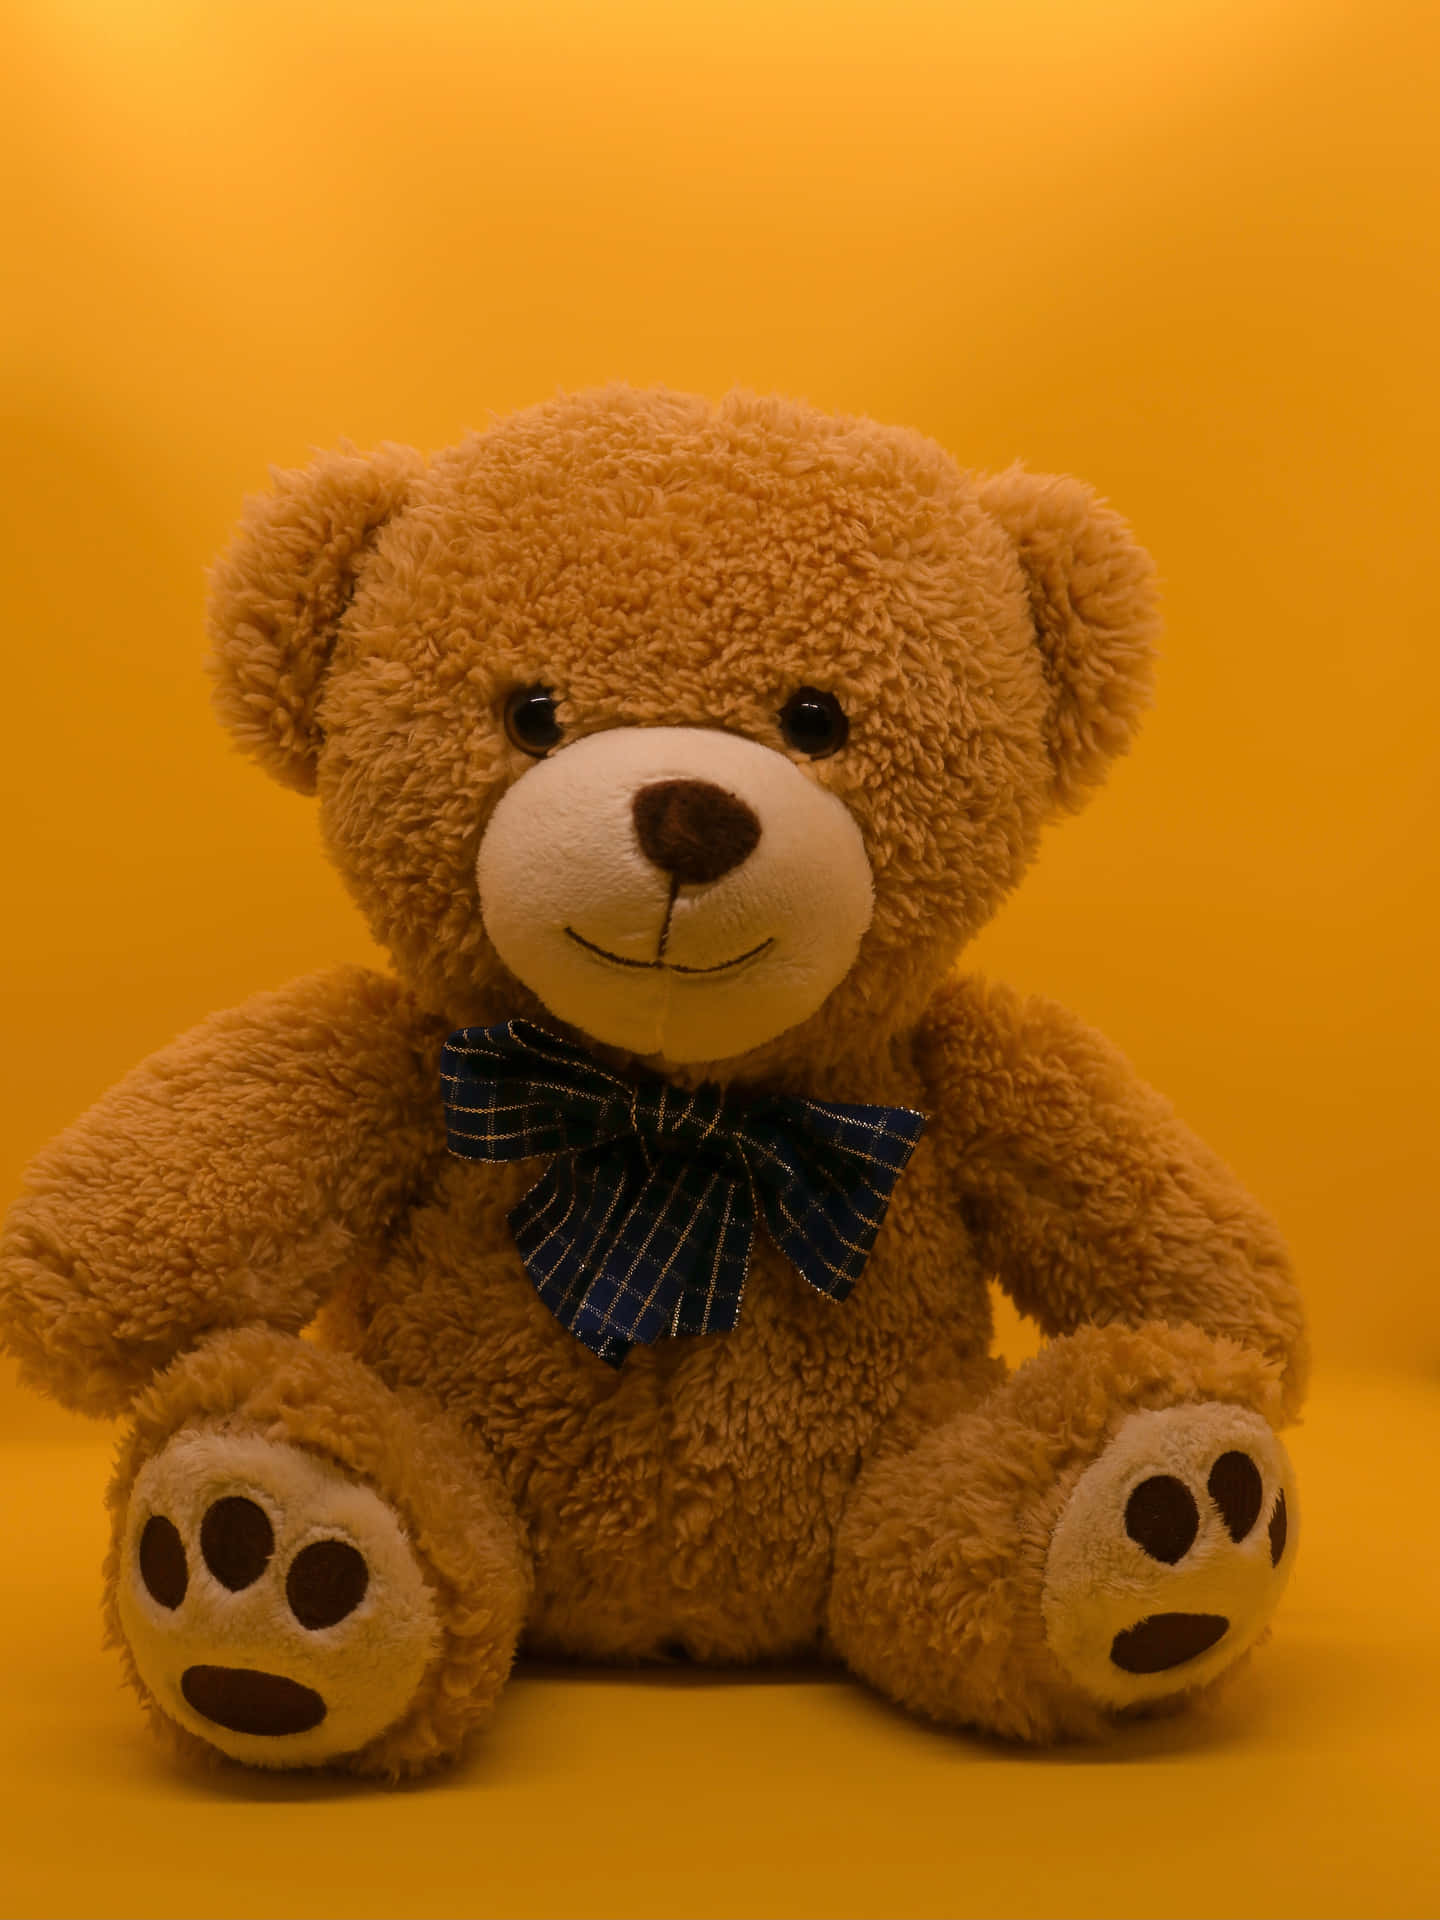 A Teddy Bear Sitting On A Yellow Background